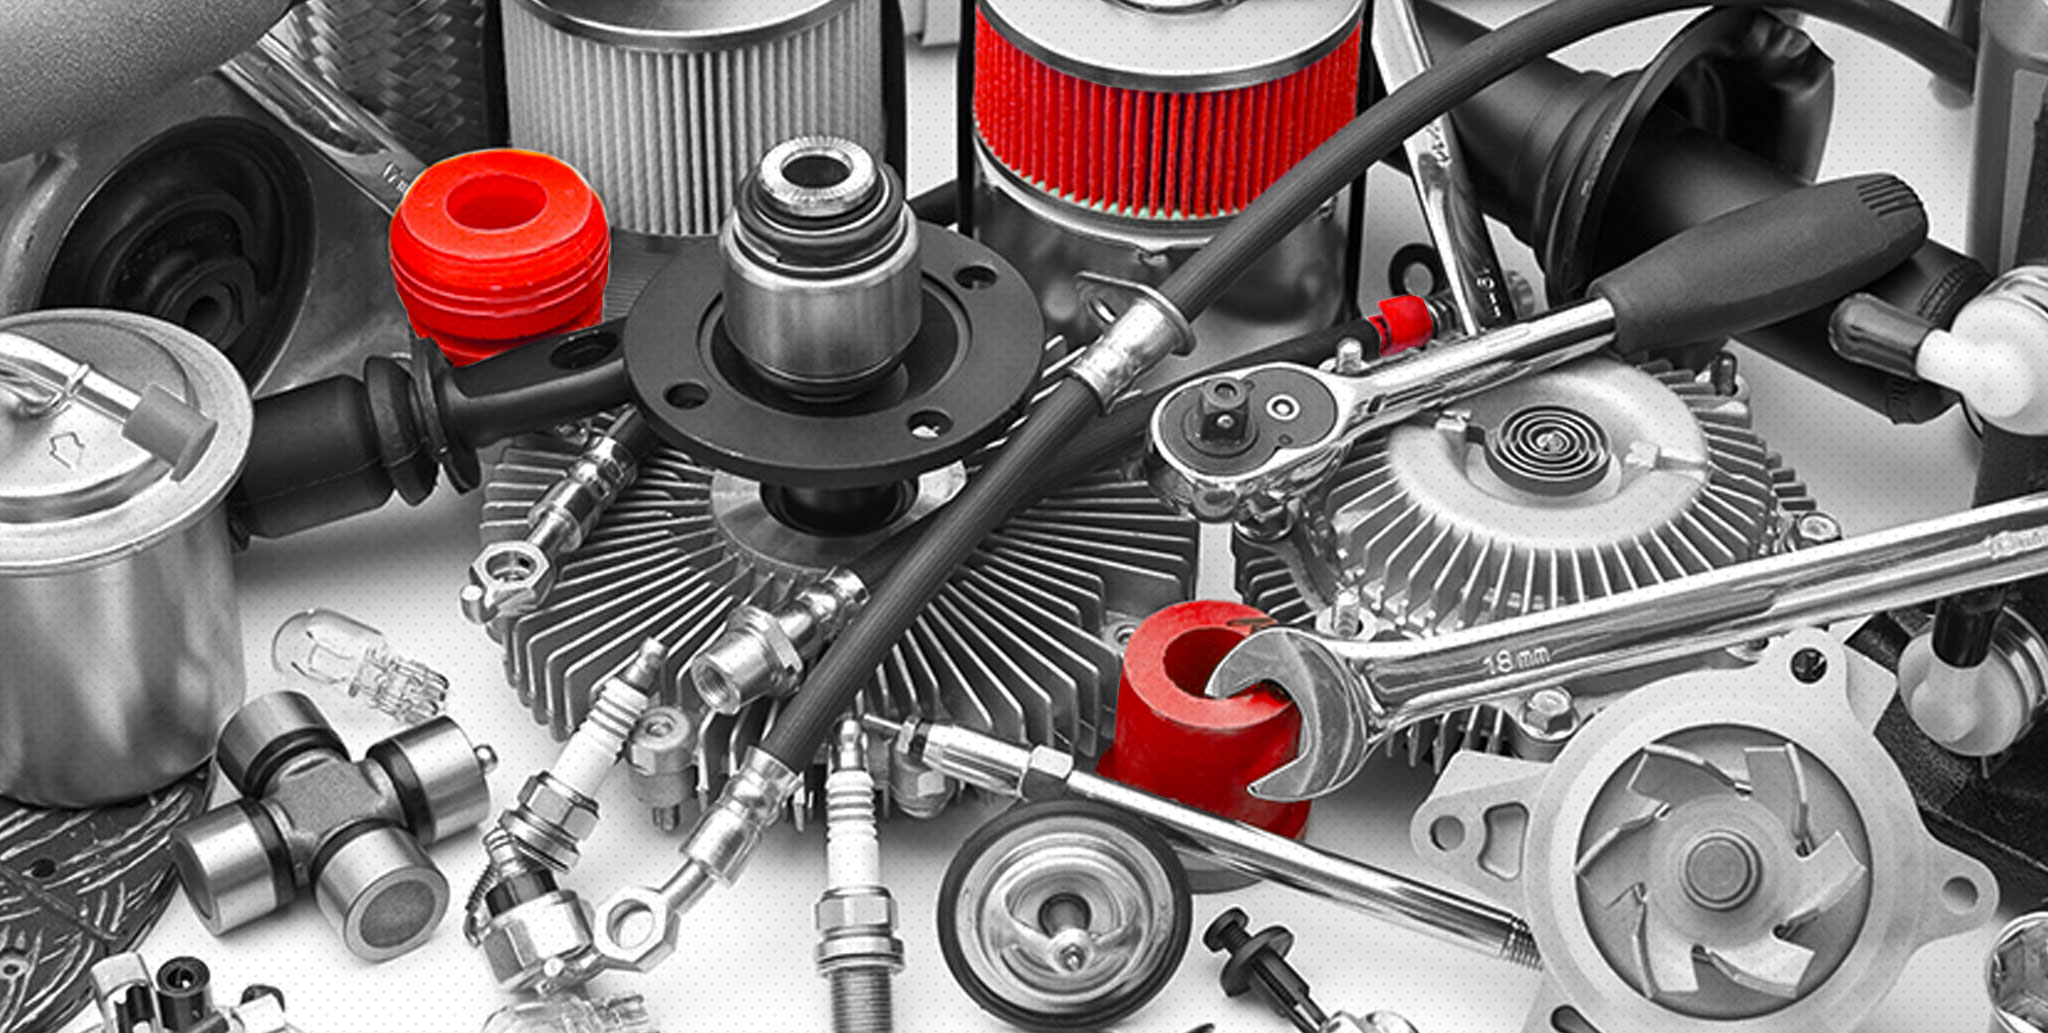 business plan for auto spare parts pdf